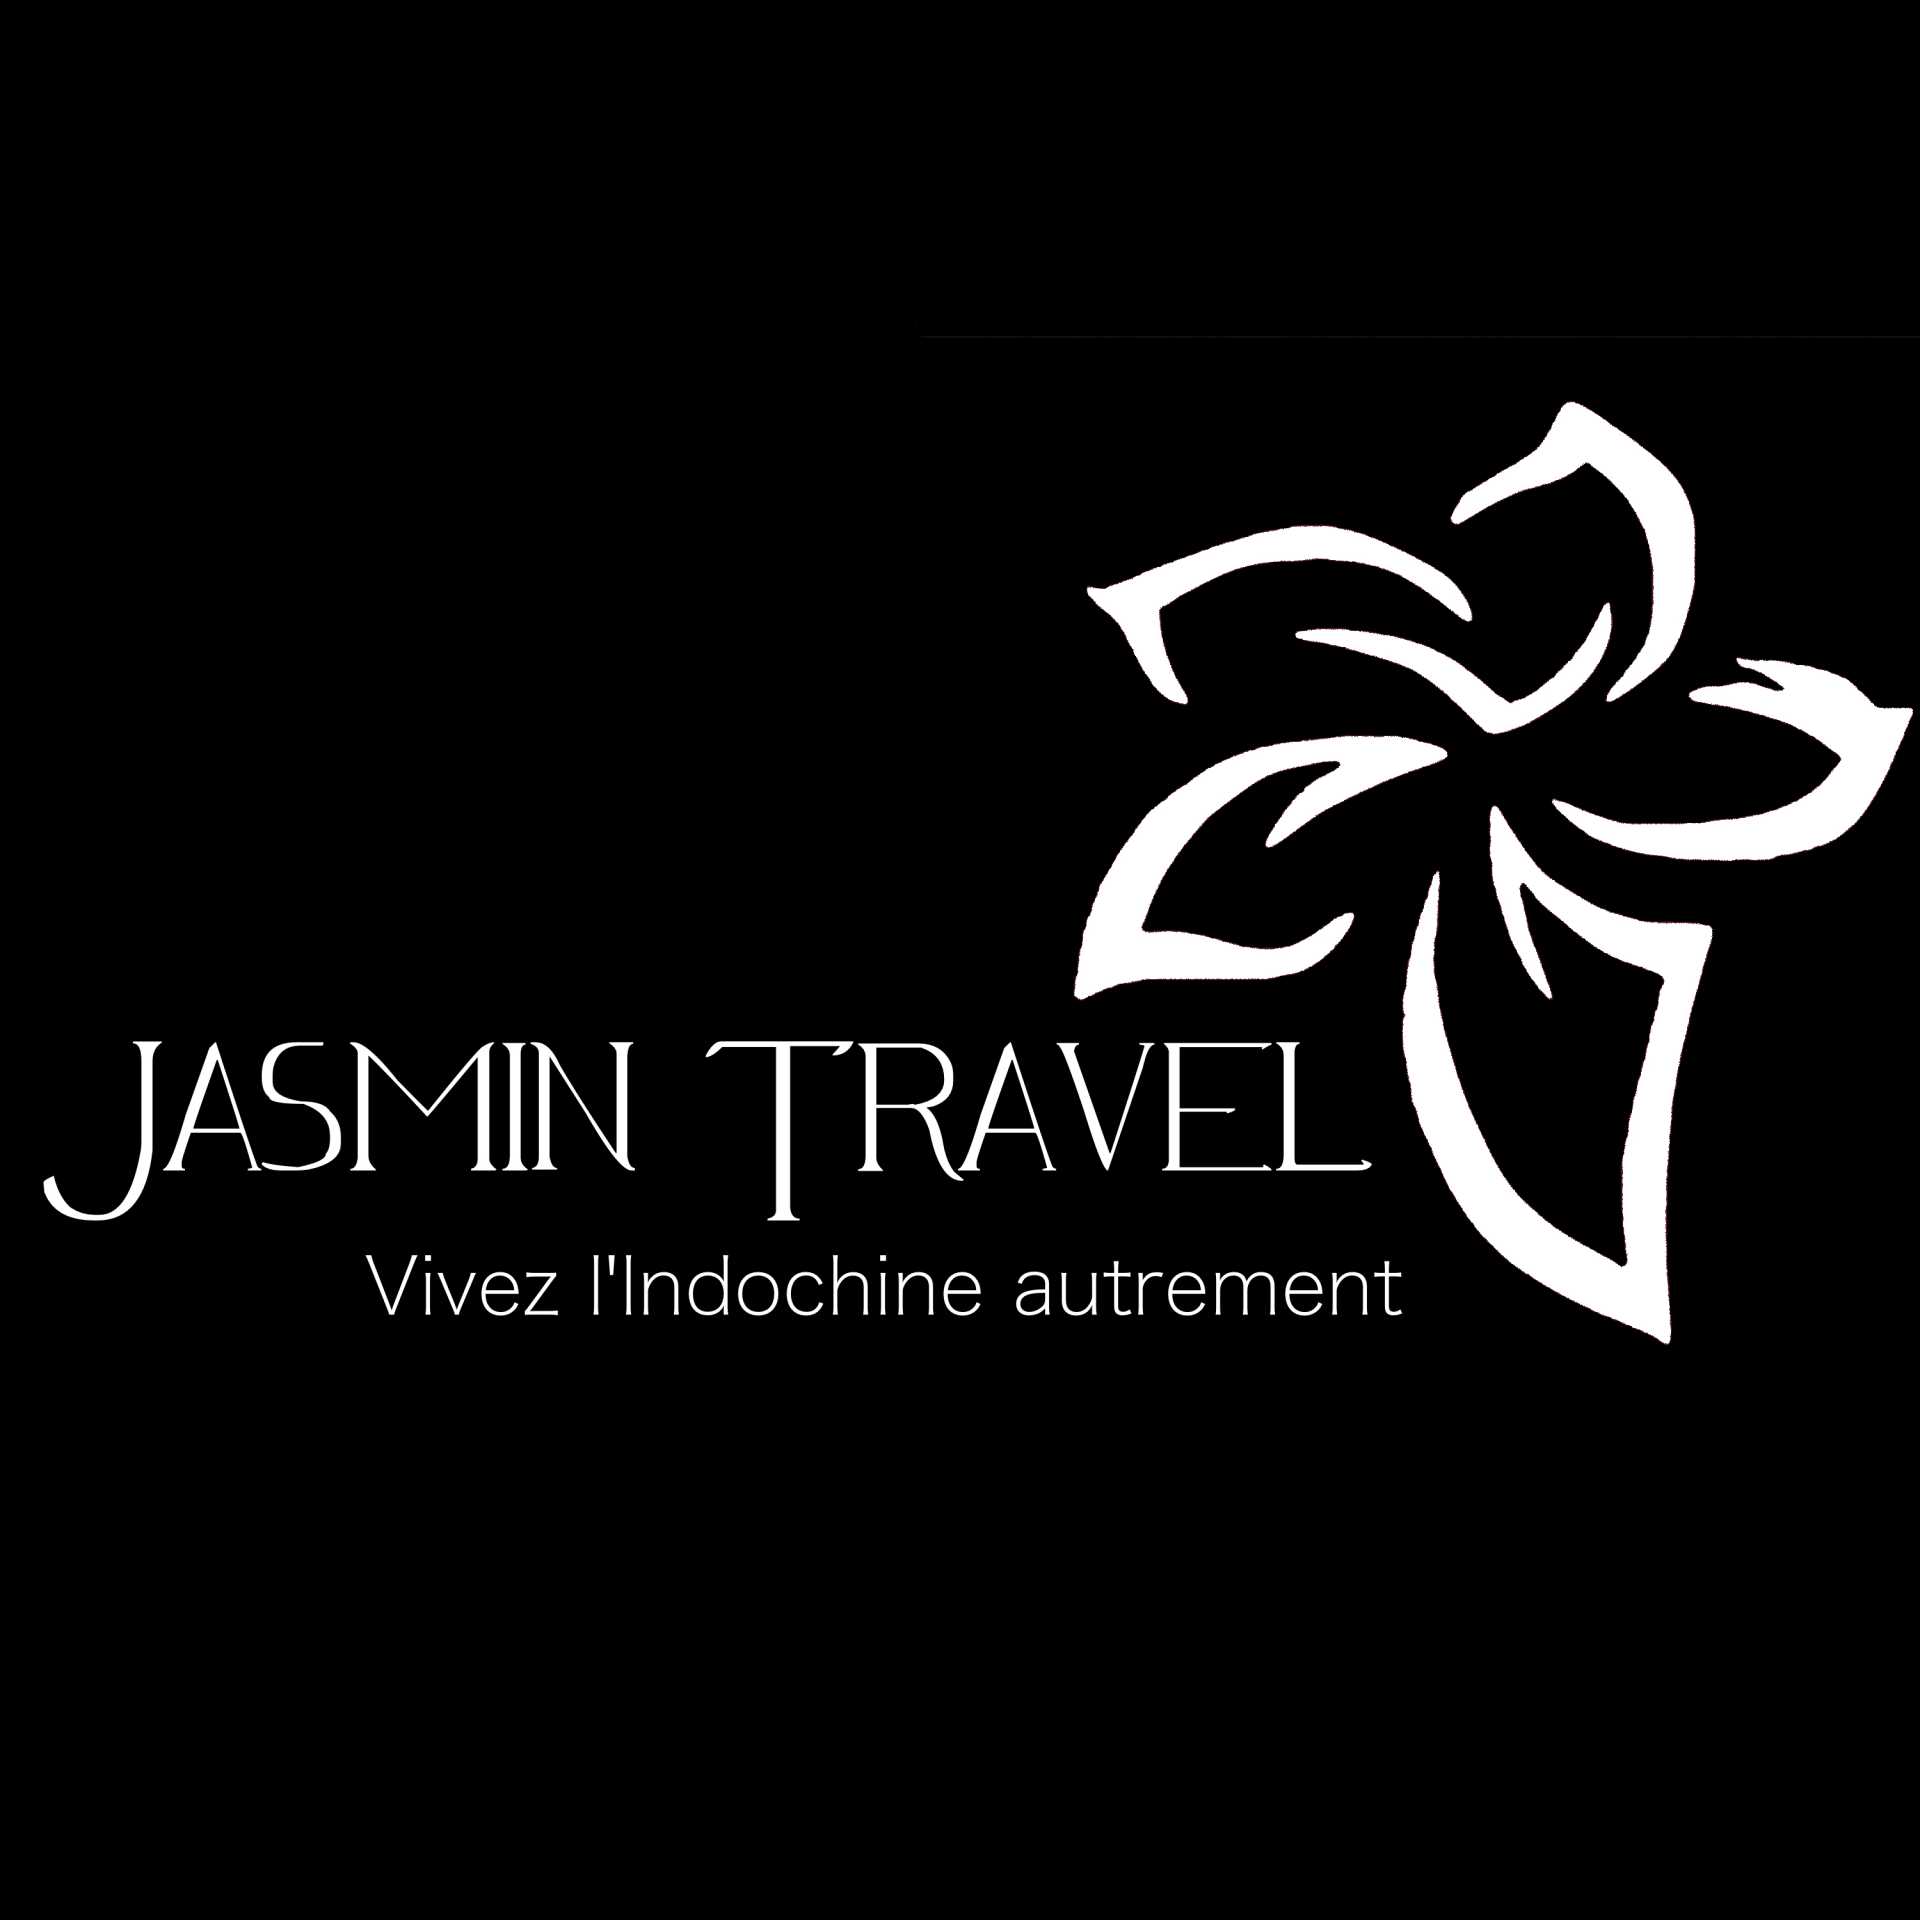 jusmin travel reviews